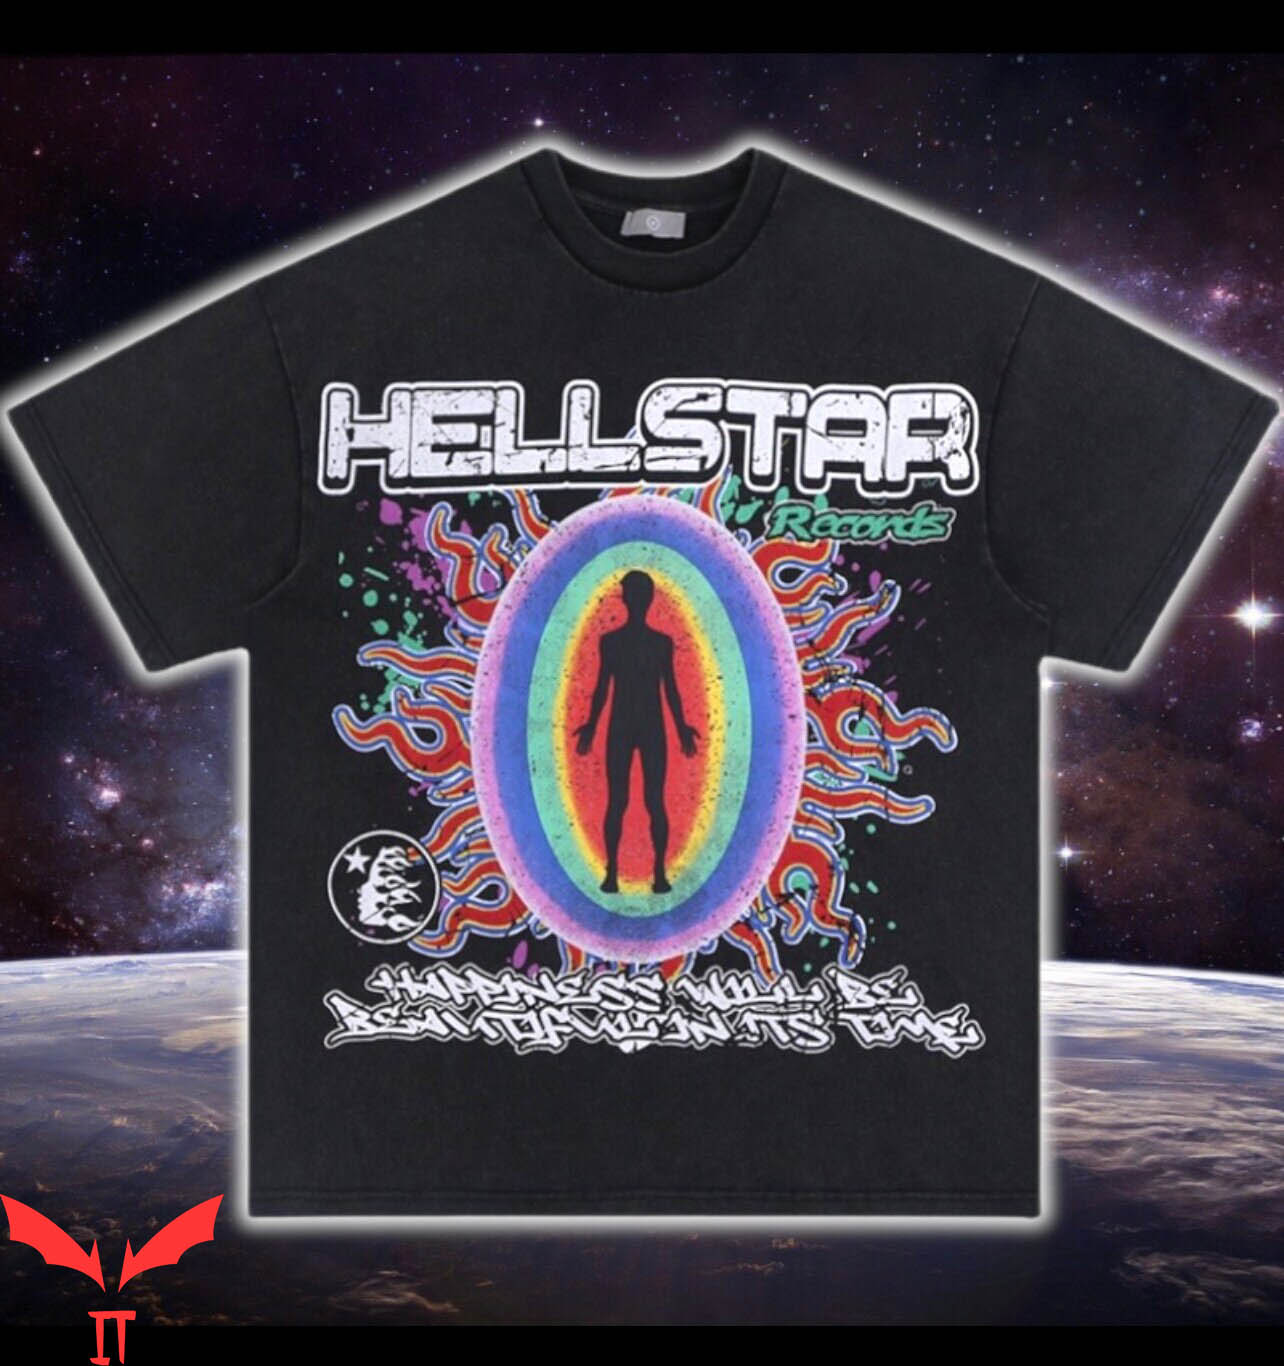 Hell Star T-Shirt Trendy Art Vintaget Studios Globe